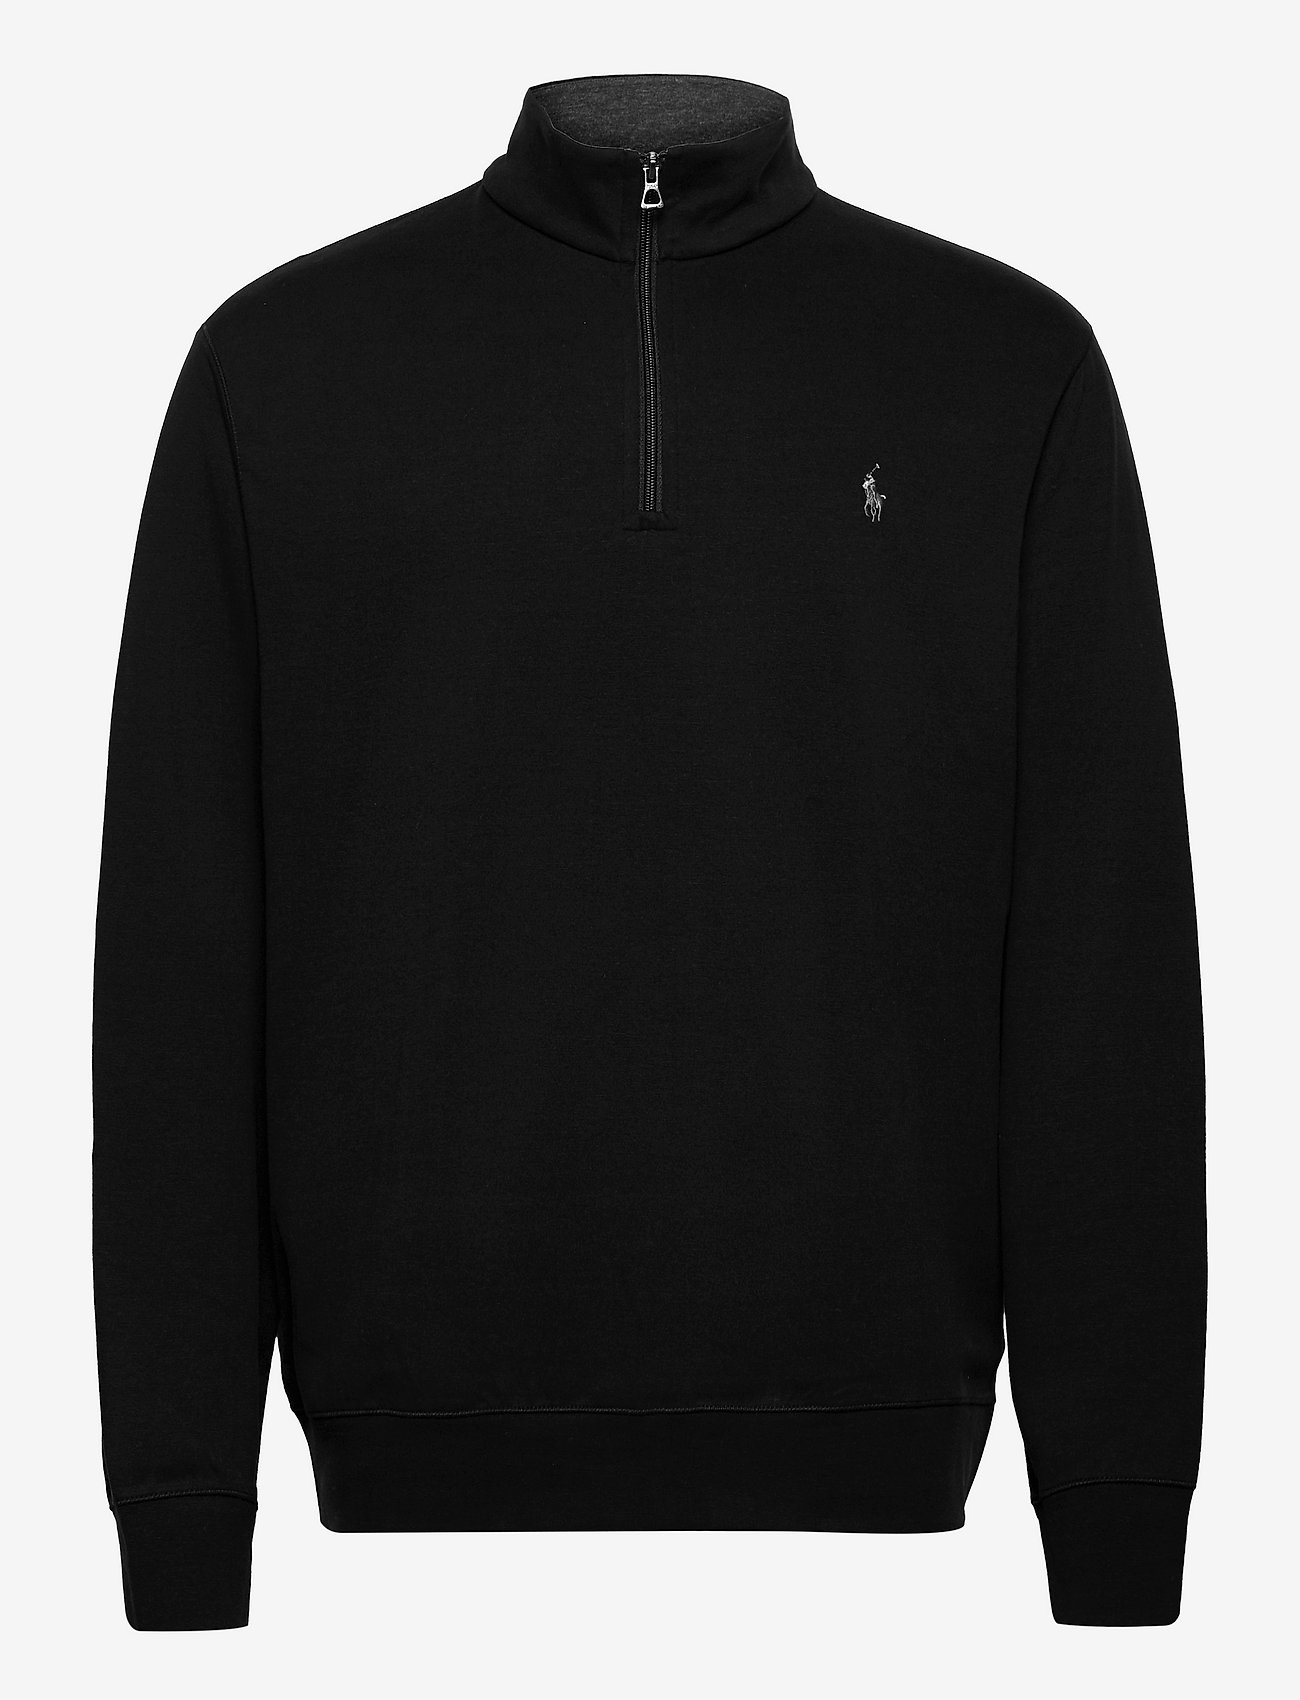 Polo Ralph Lauren - Luxury Jersey Quarter-Zip Pullover - dressipluusid - polo black/c9686 - 0